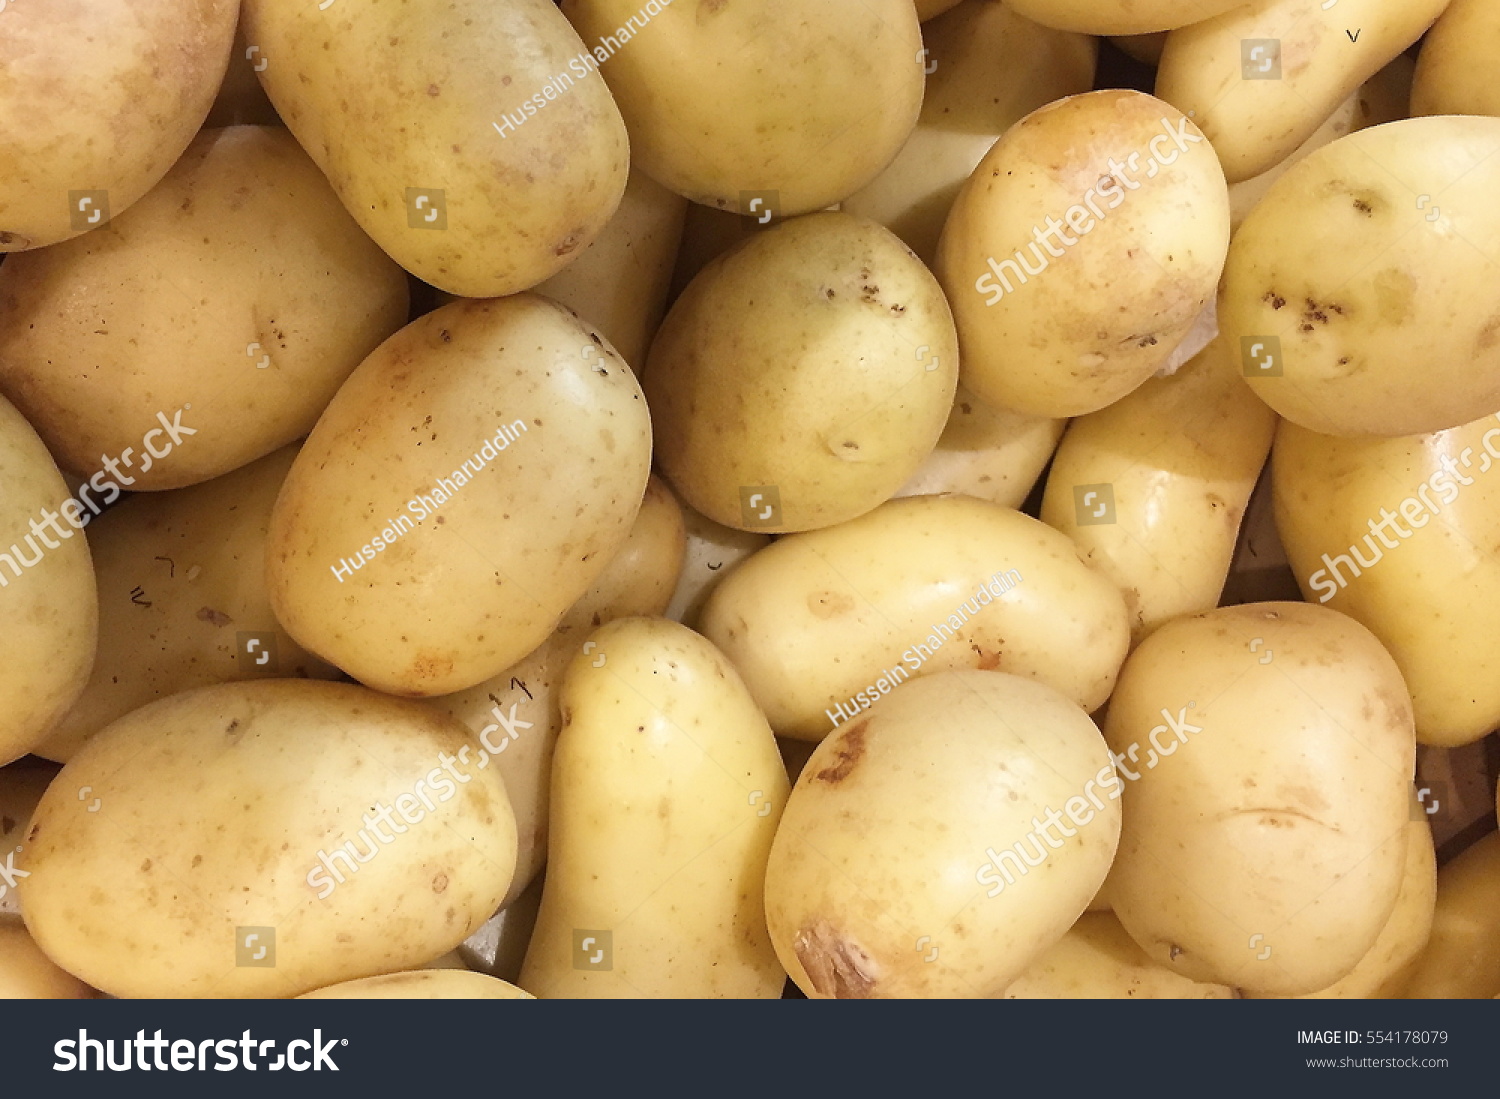 Potatoes at a market #554178079